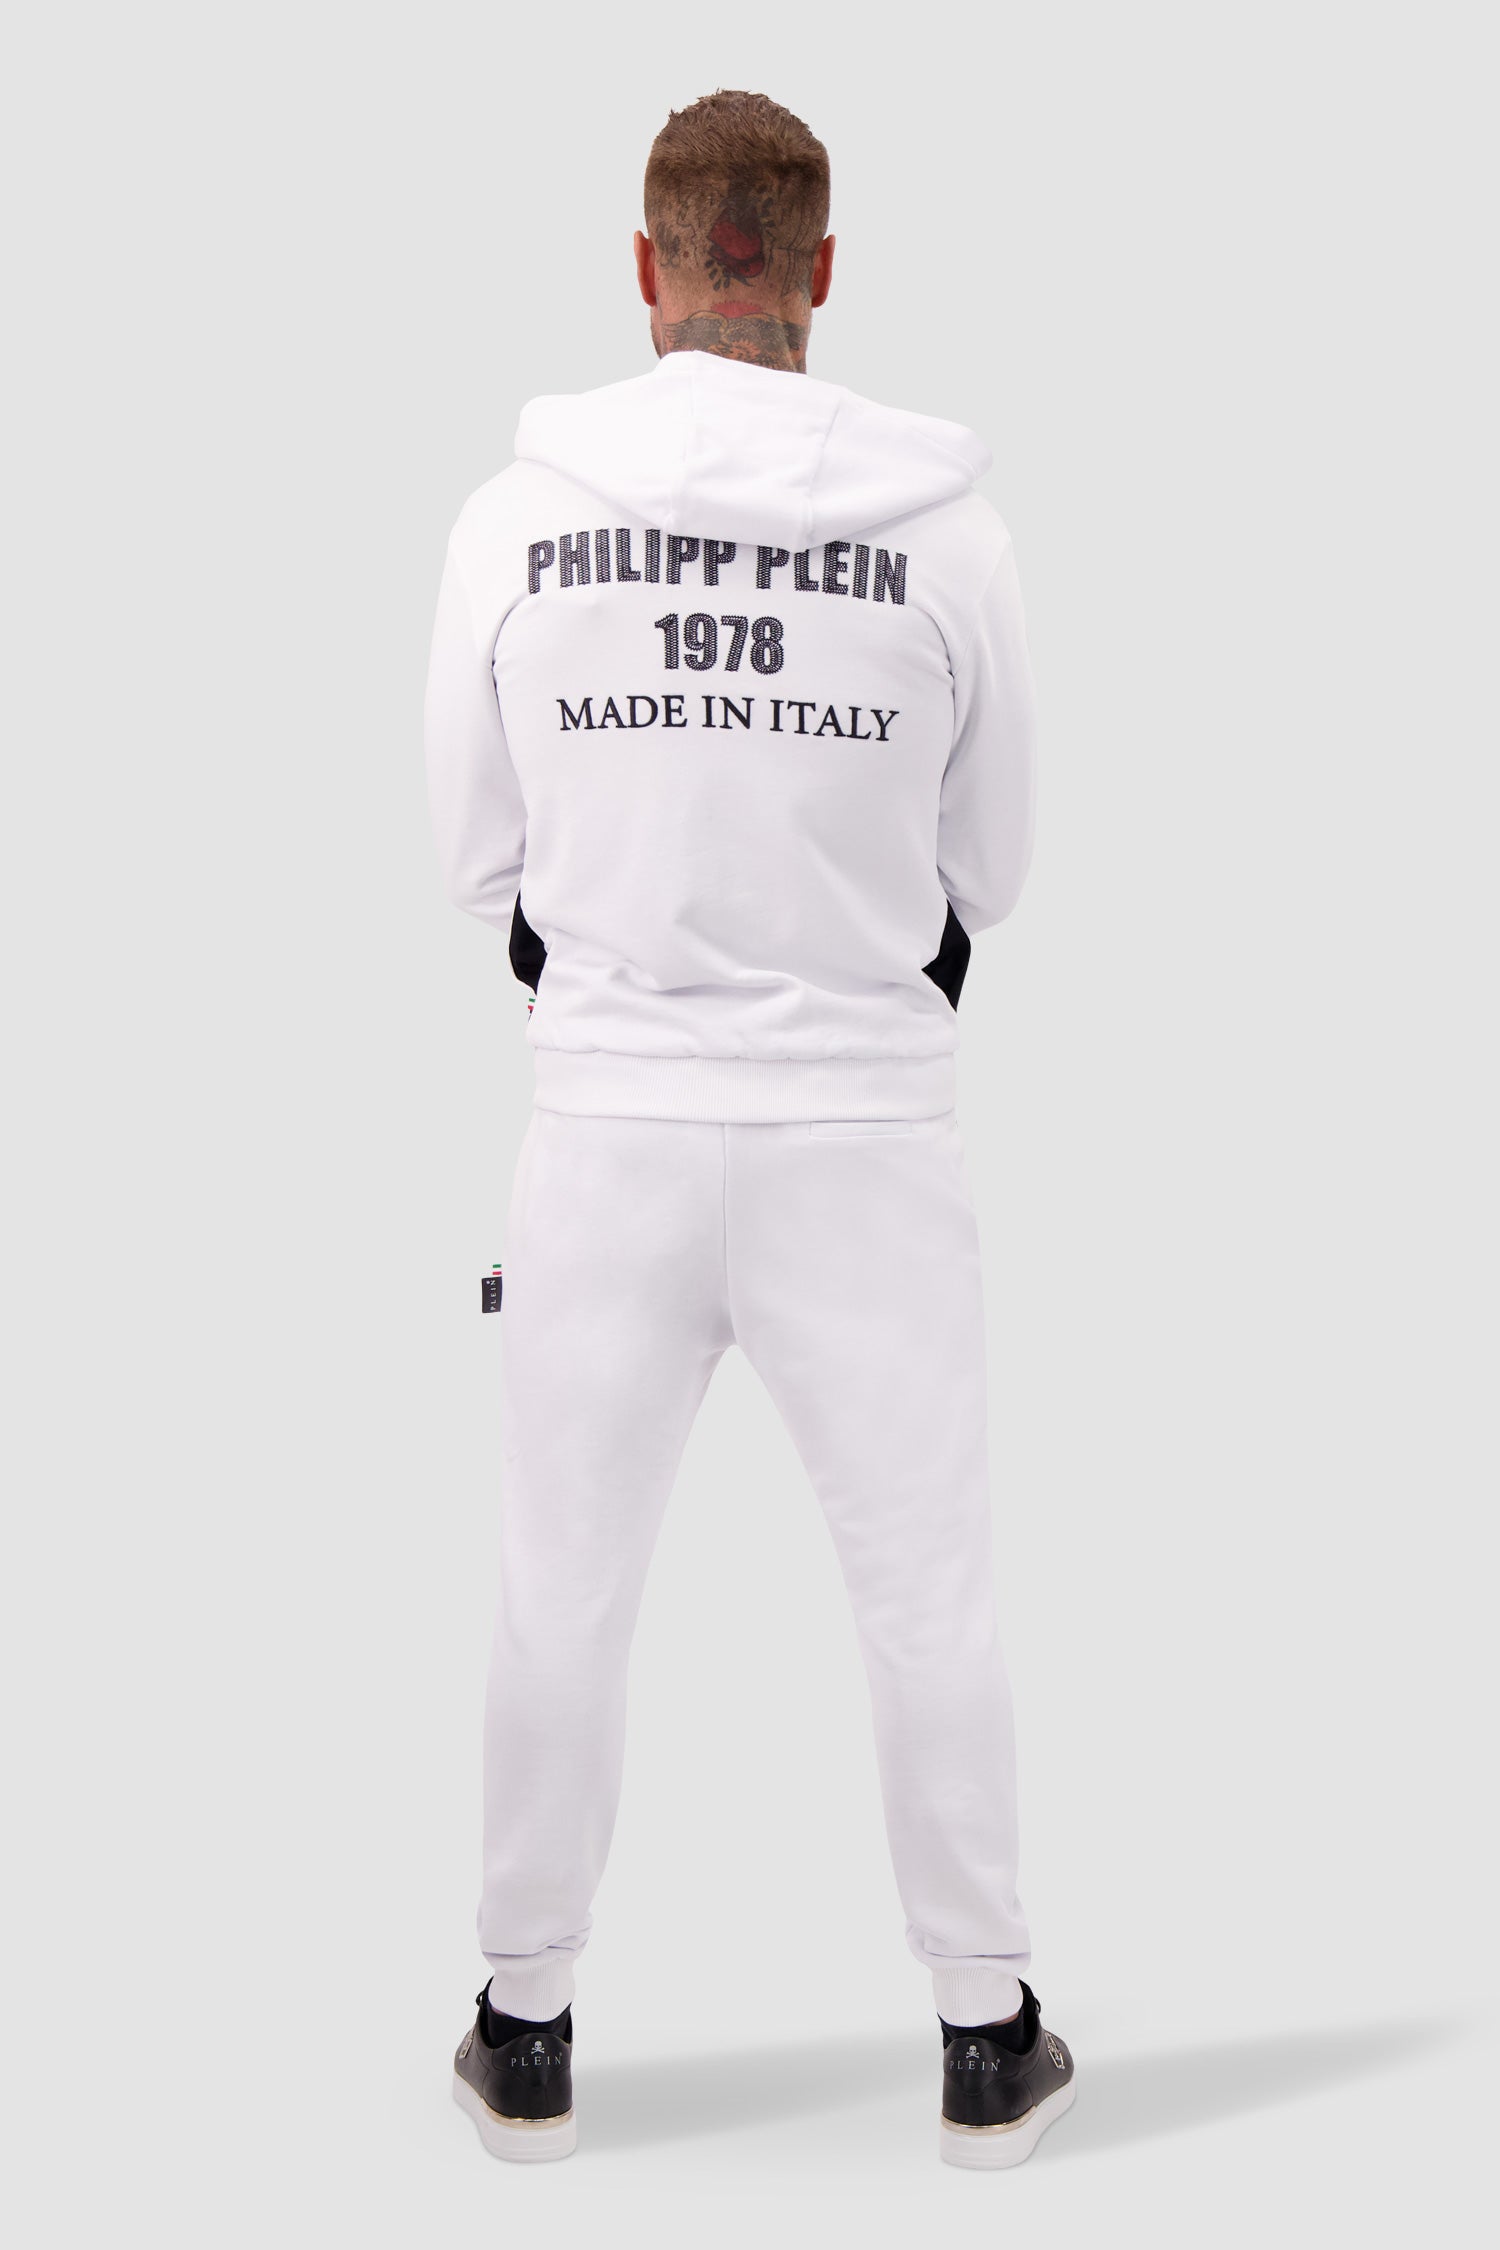 Philipp Plein White PP1978 Jogging Tracksuit